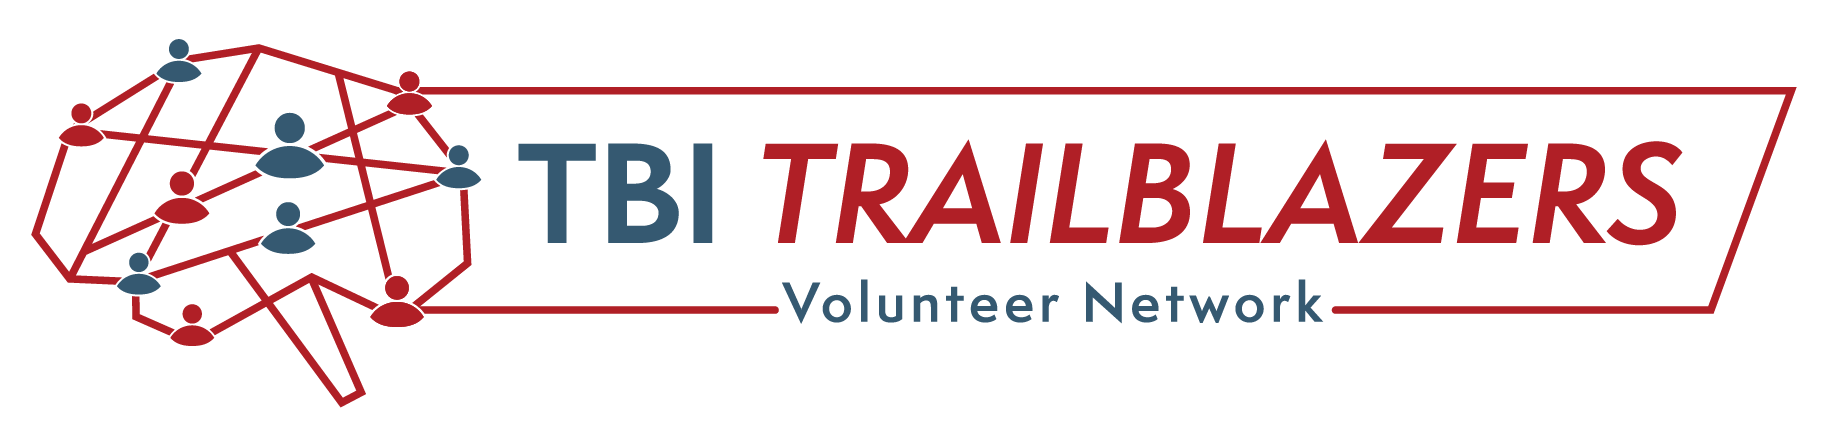 TBI Trailblazers Volunteer Network